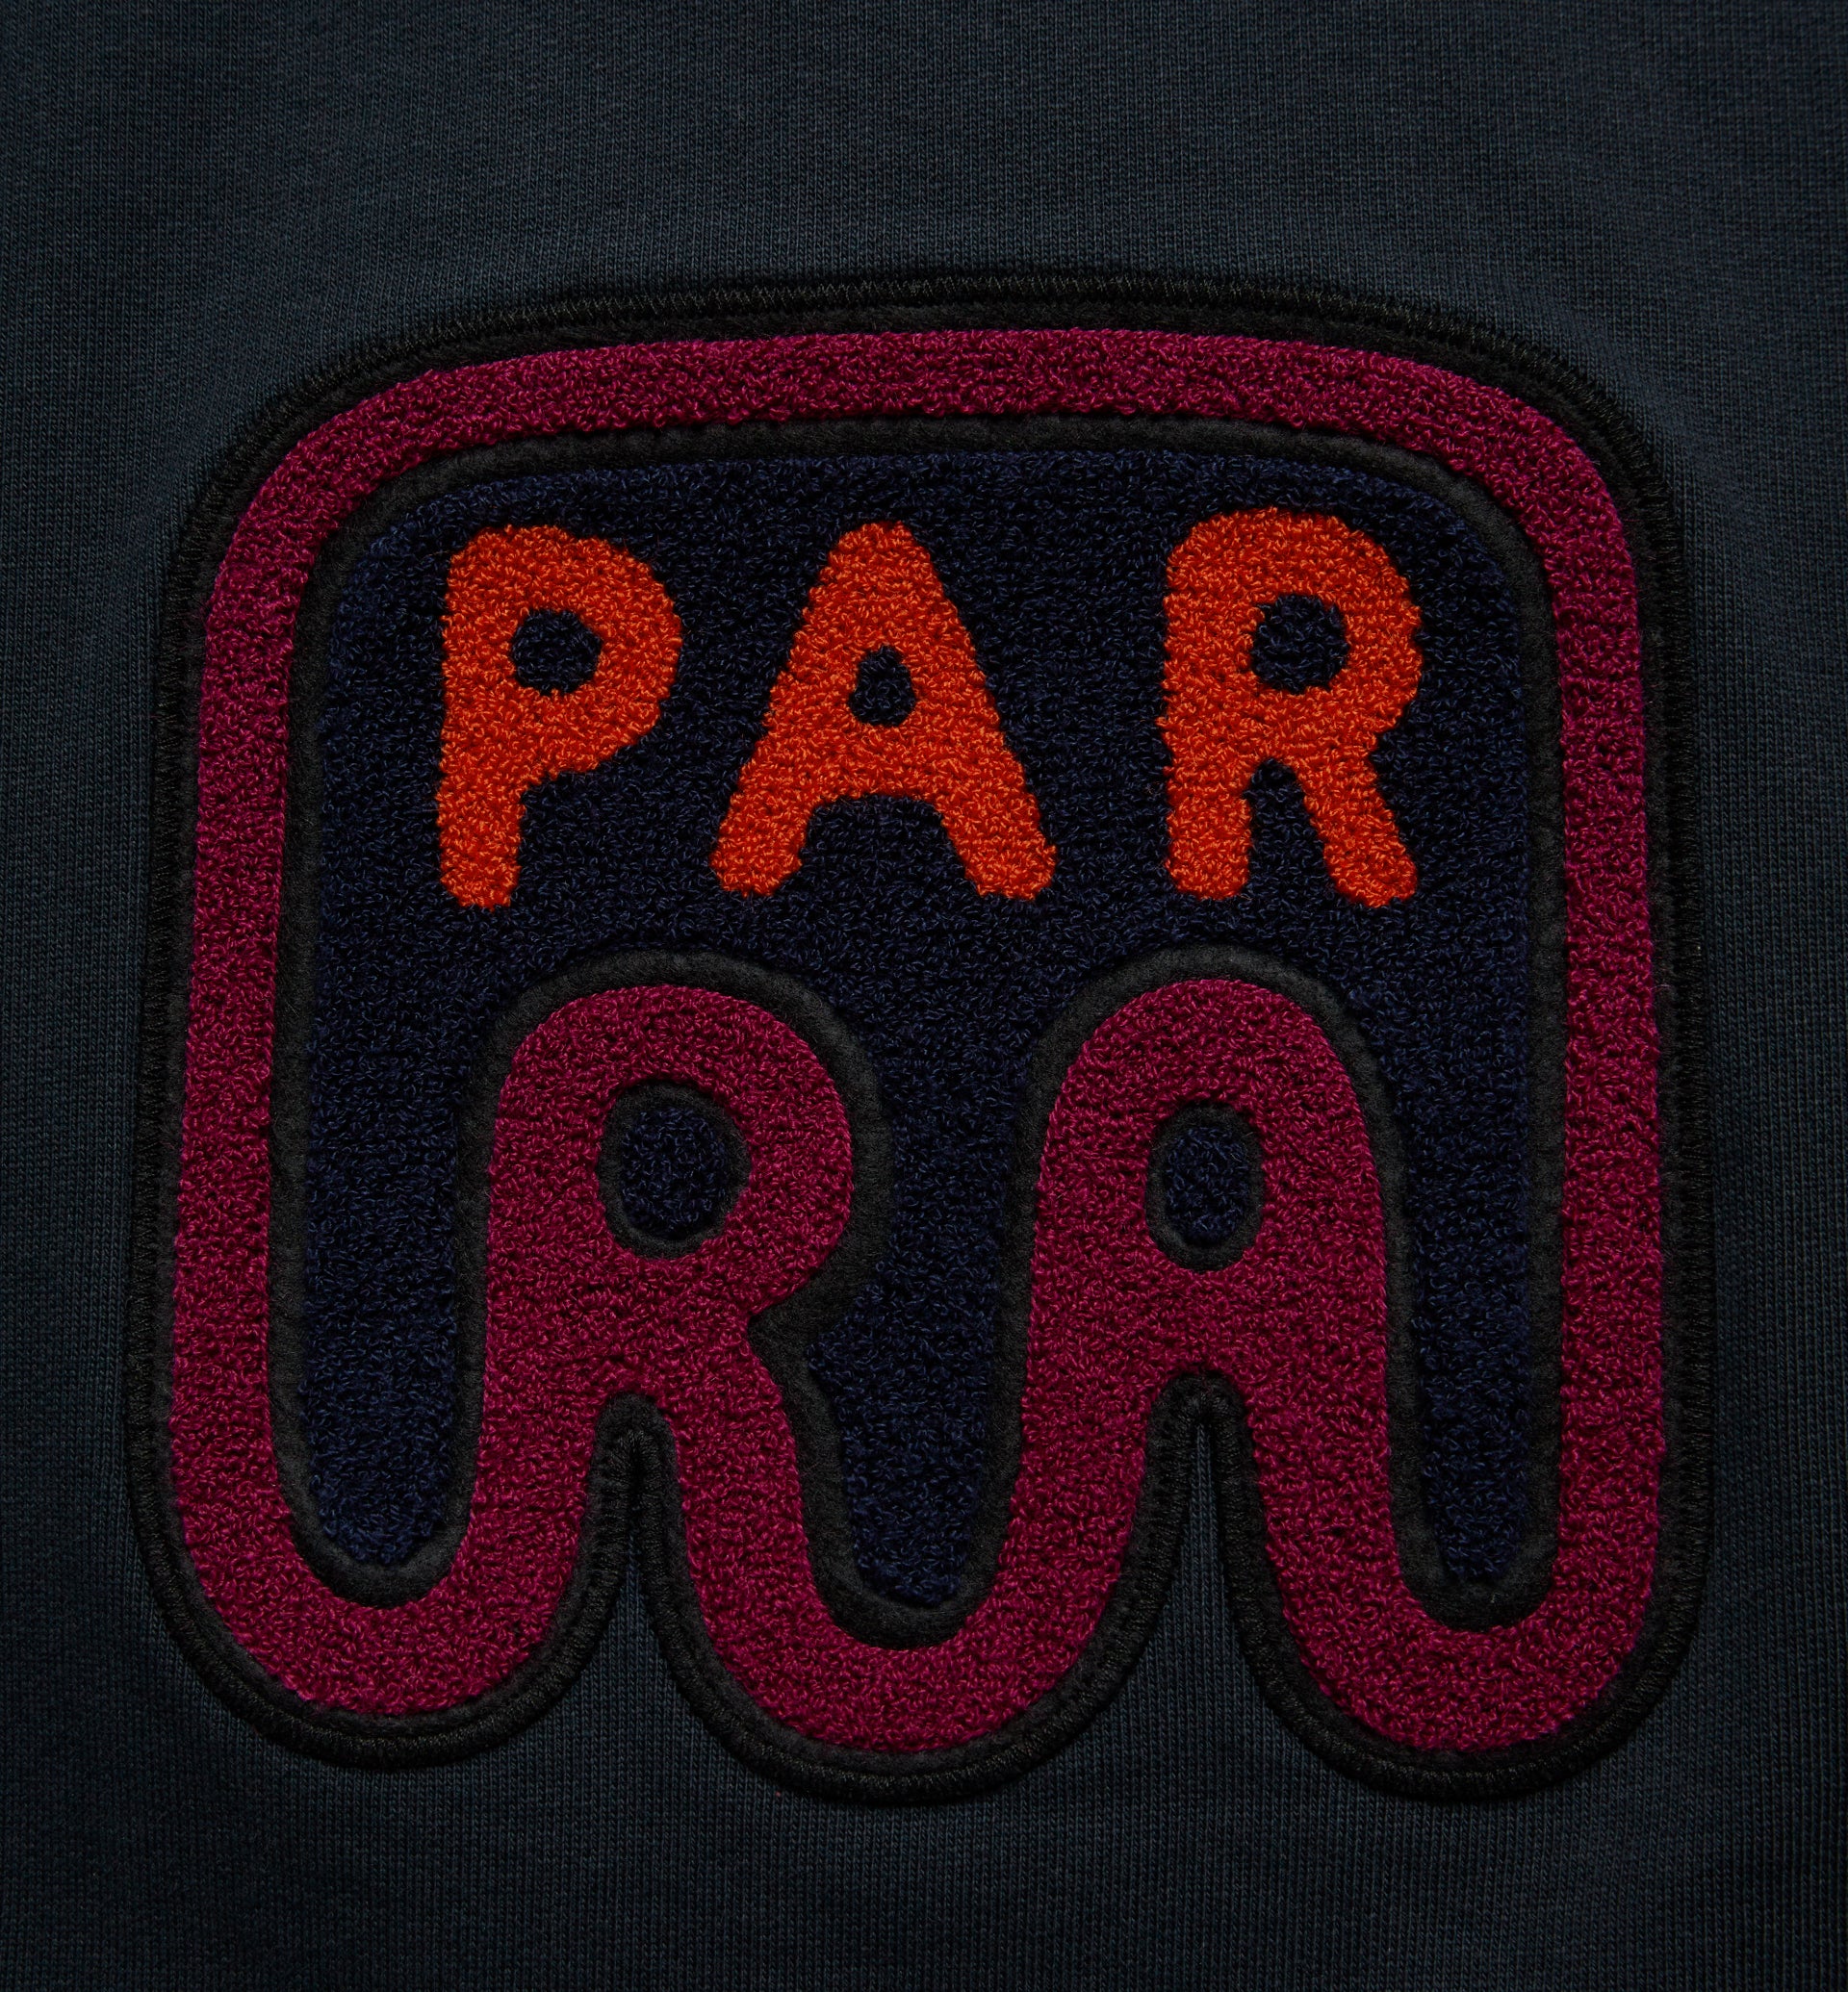 Parra - fast food logo crew neck sweatshirt